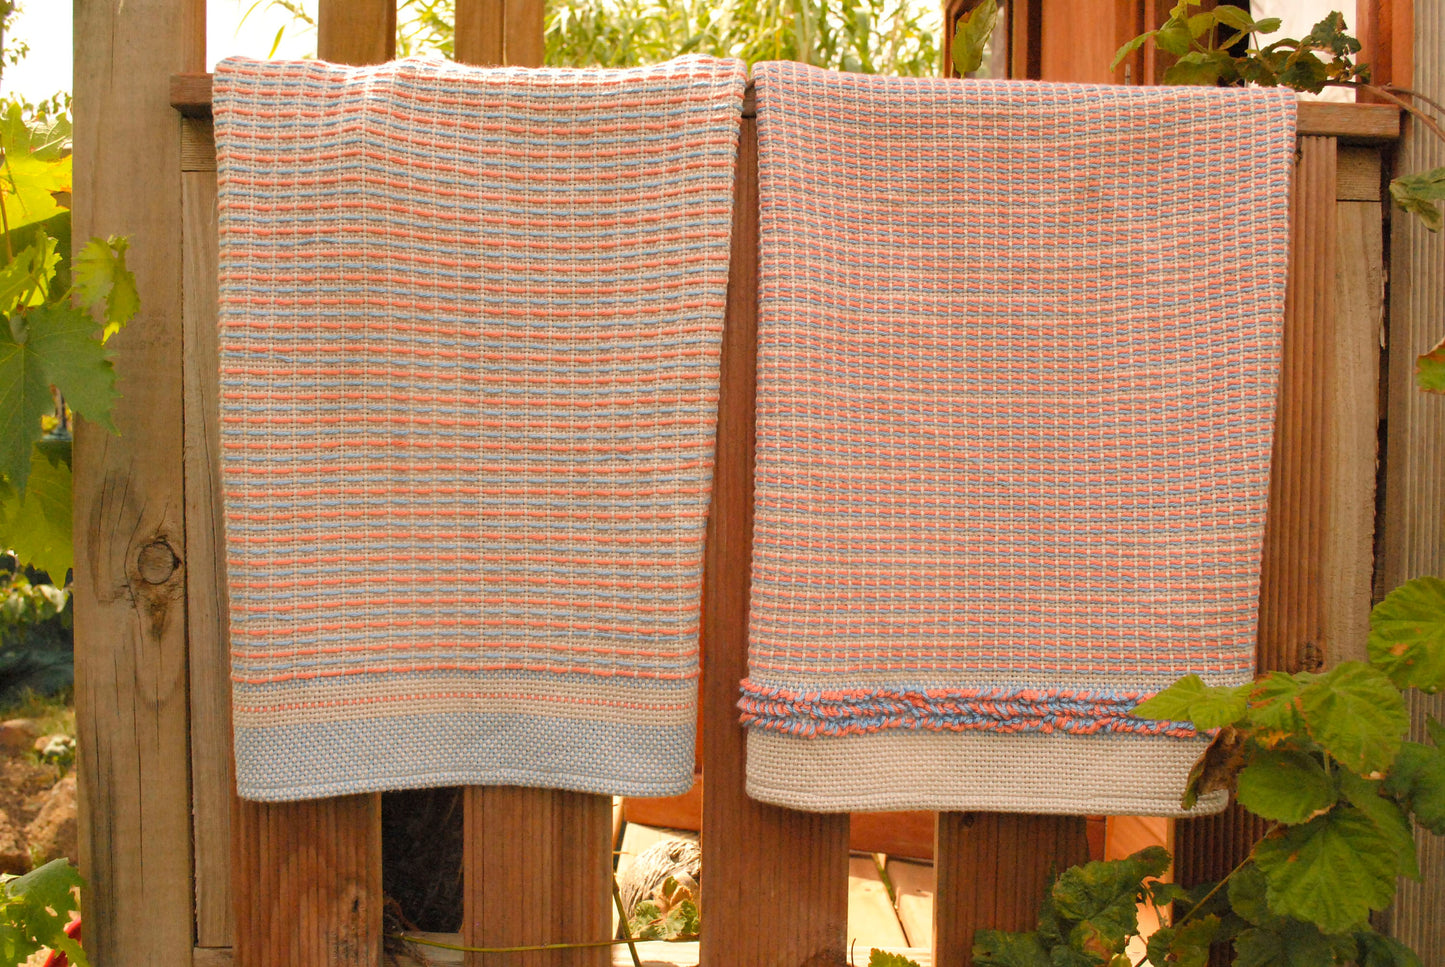 Rigid Heddle Loom Pattern, Lux Hand Towels PDF pattern, digital download, hand woven towels